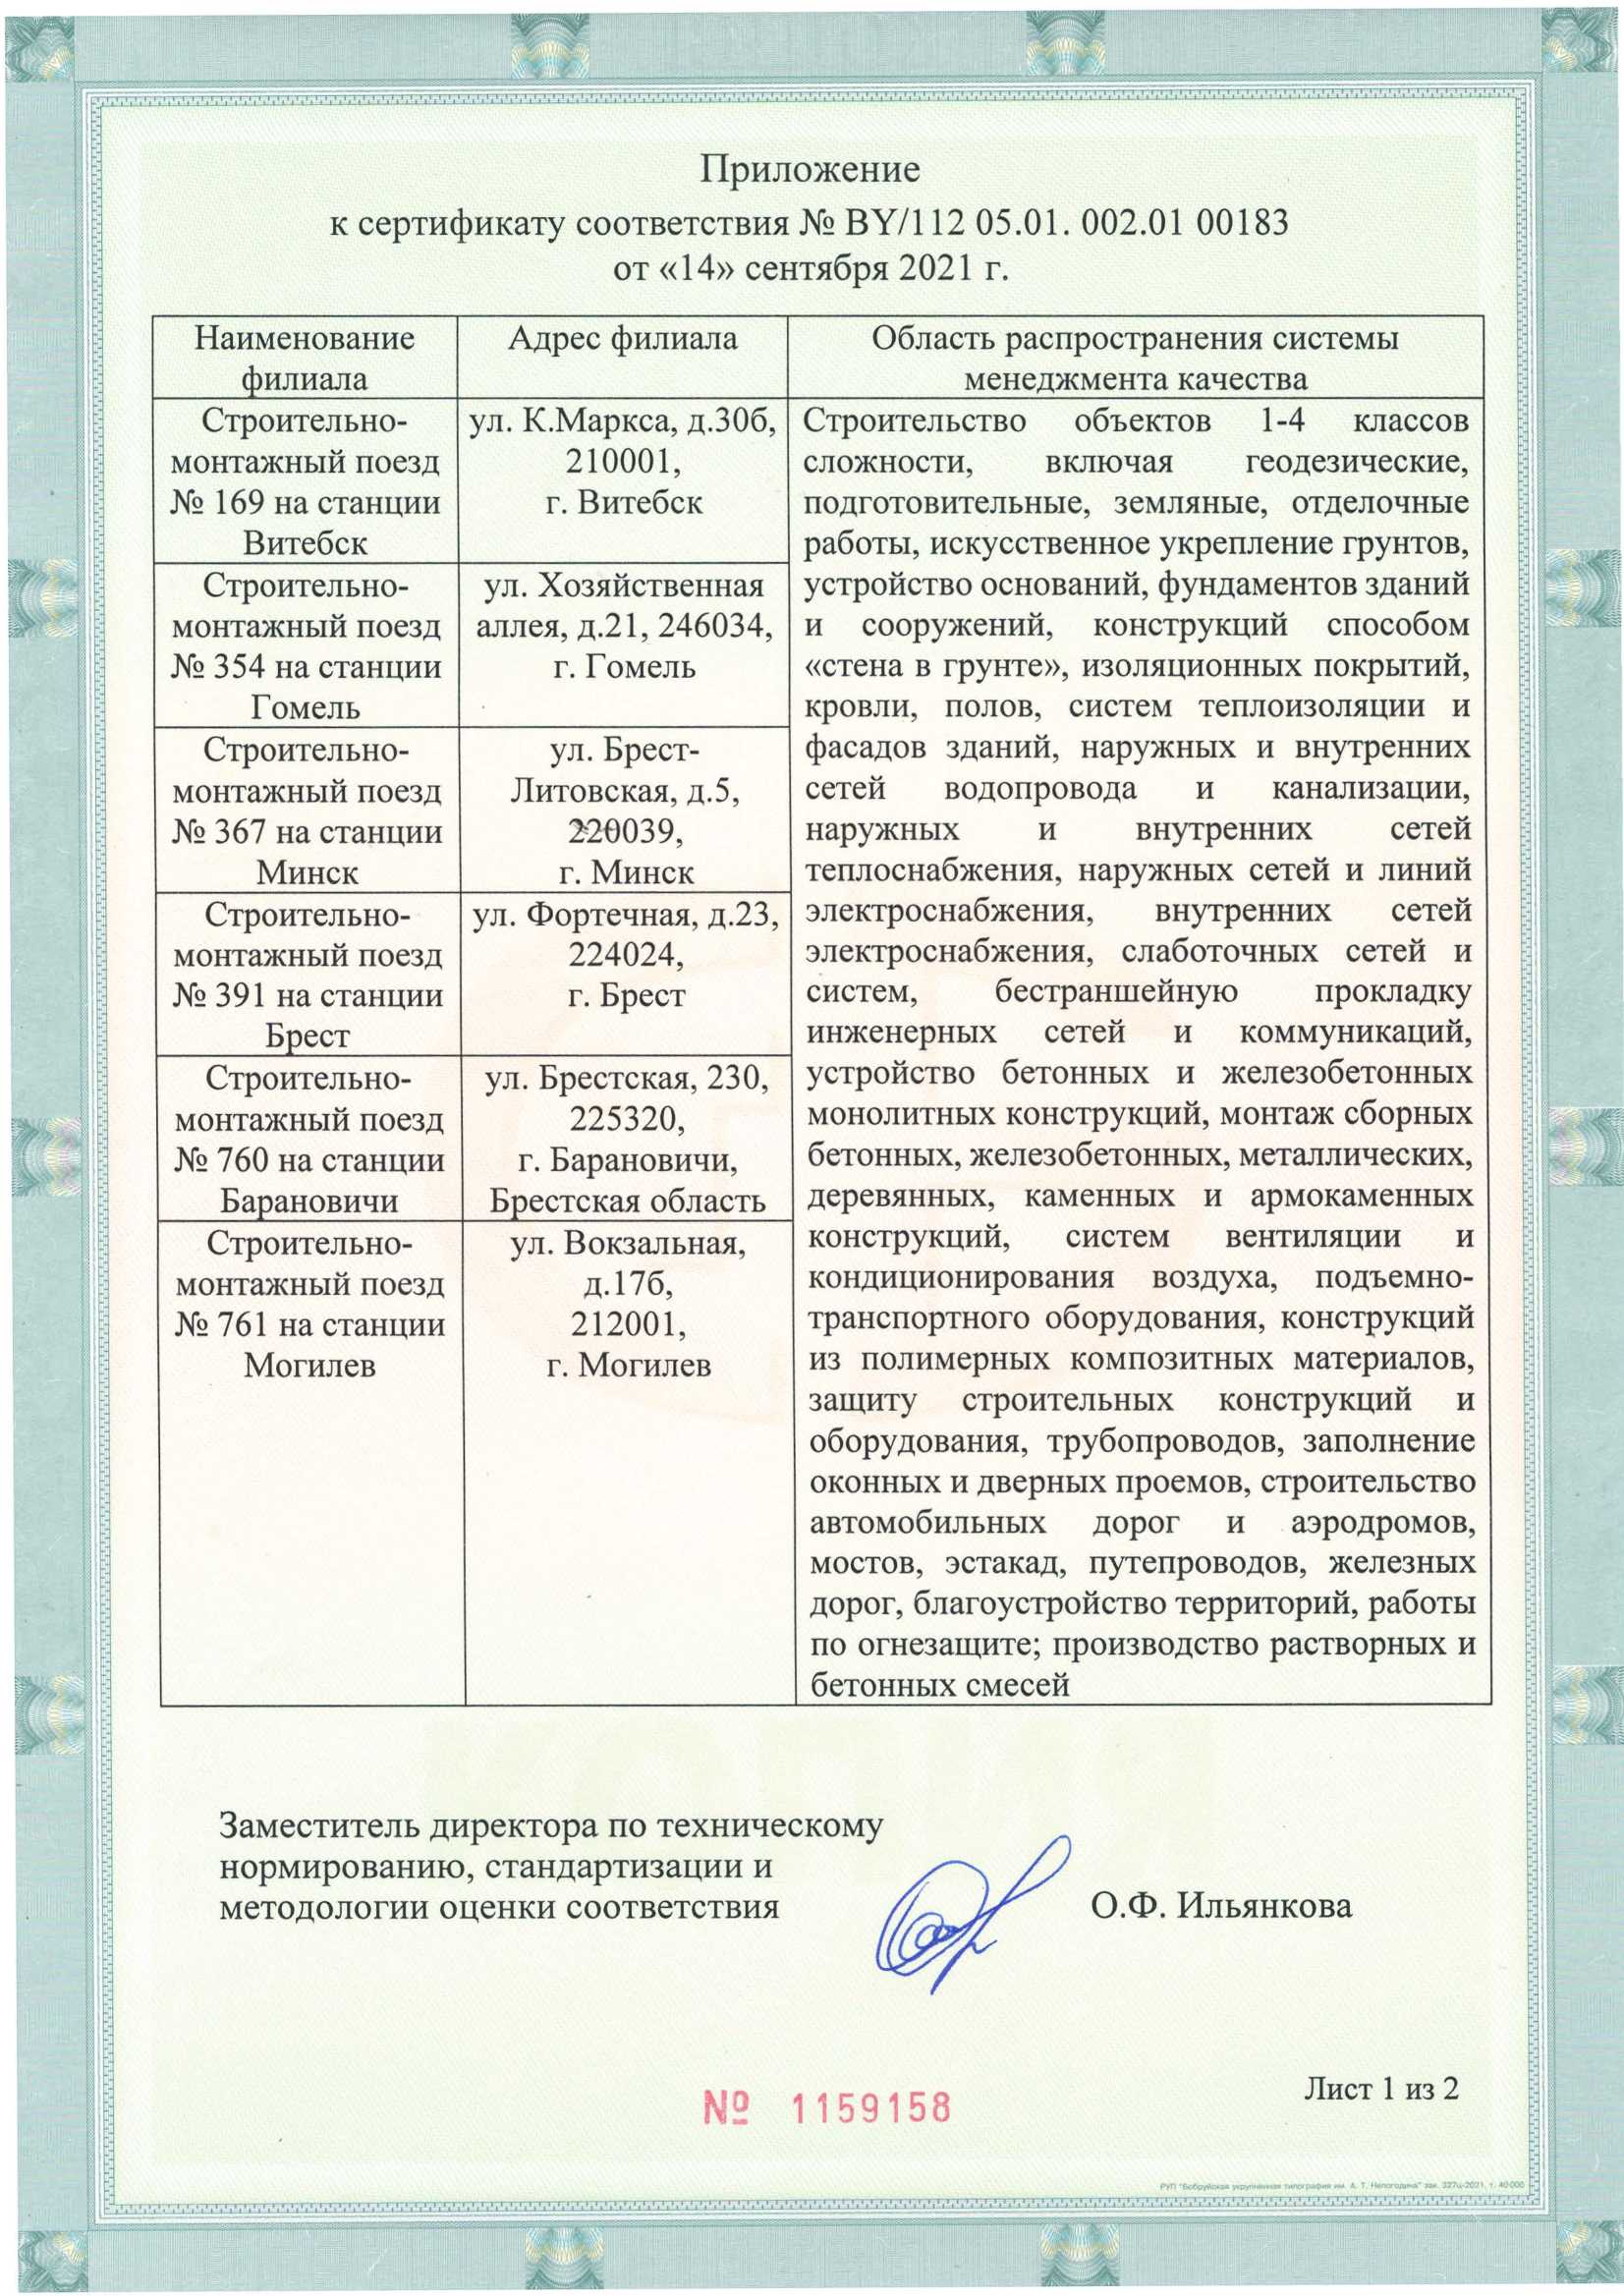 1. sertifikat stb iso 9001-2015 russkiy yazyk-2021 2